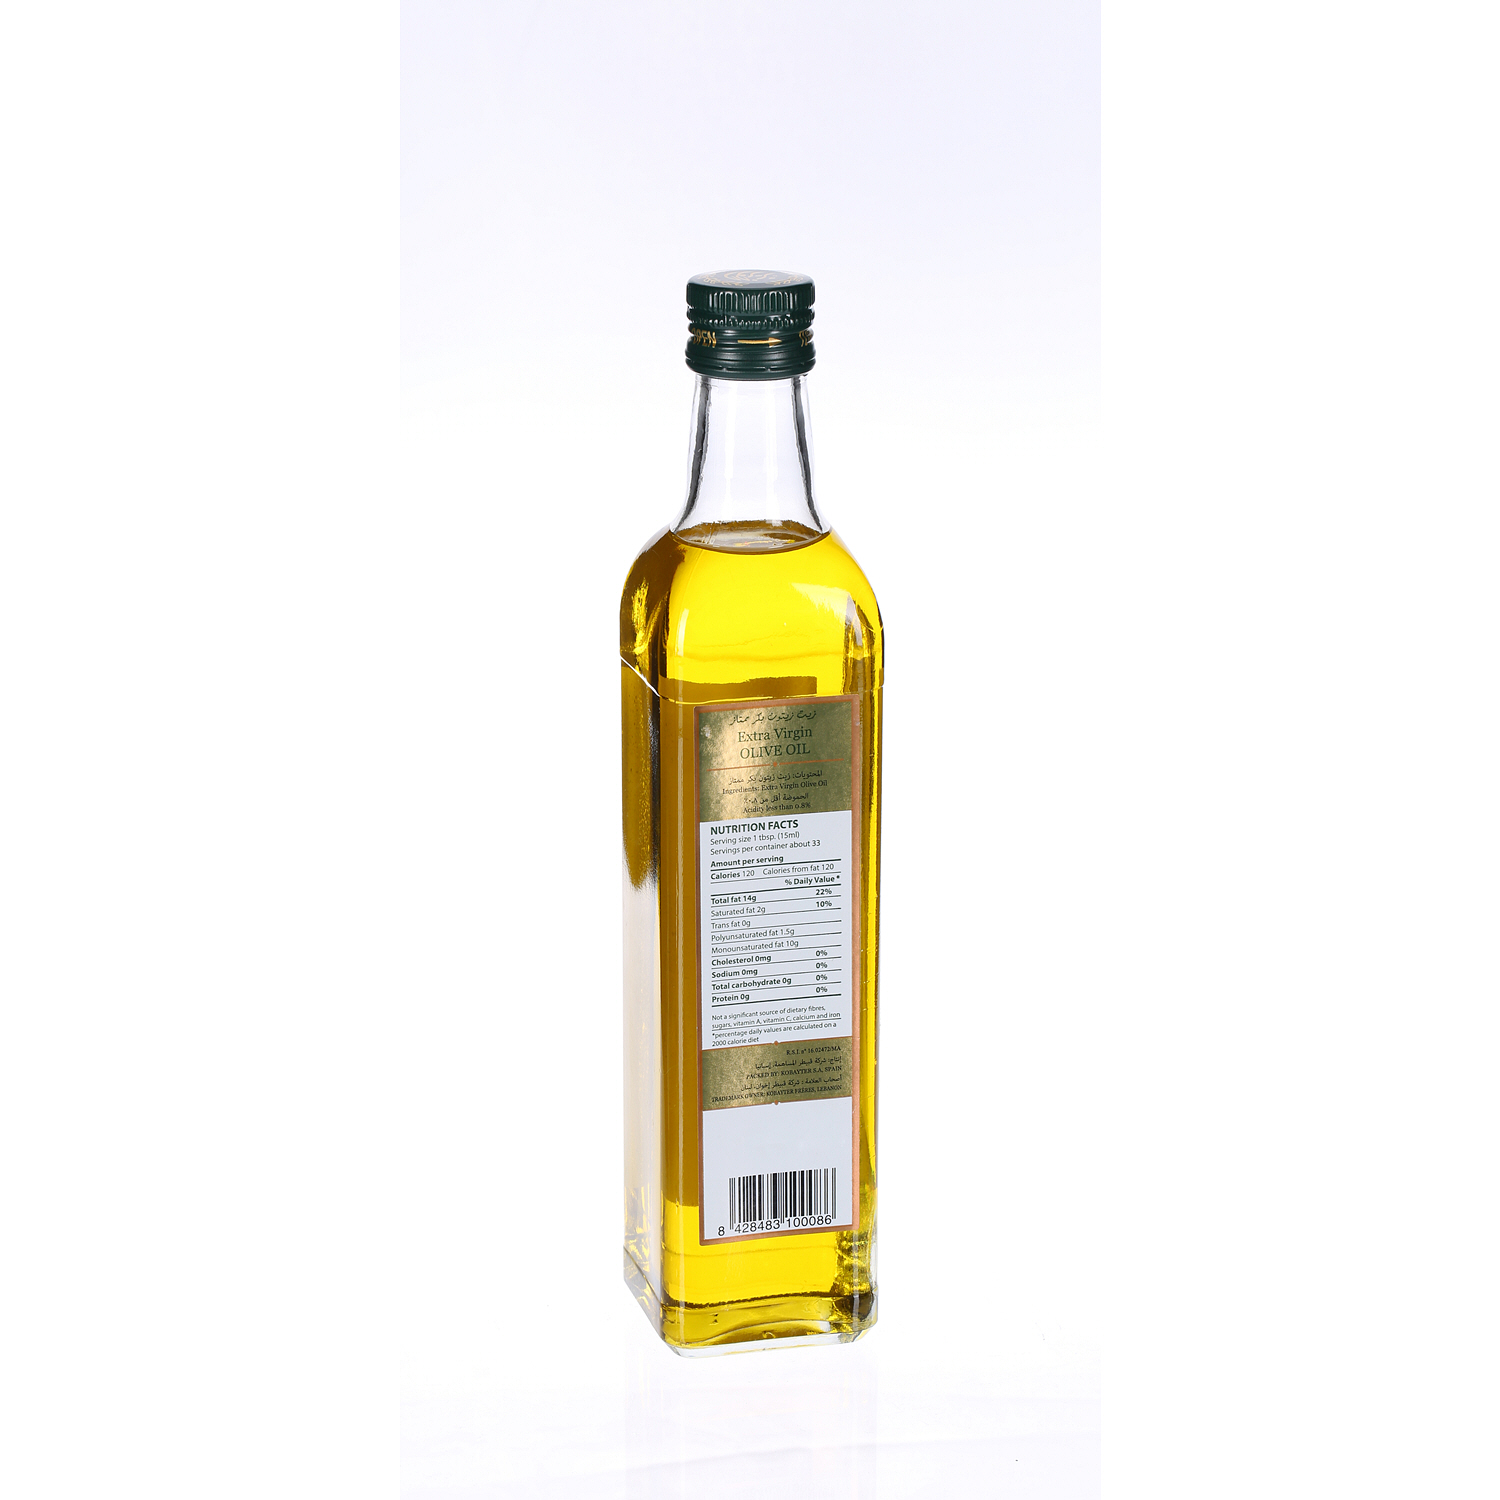 Al Wazir Extra Virgin Olive Oil 500ml